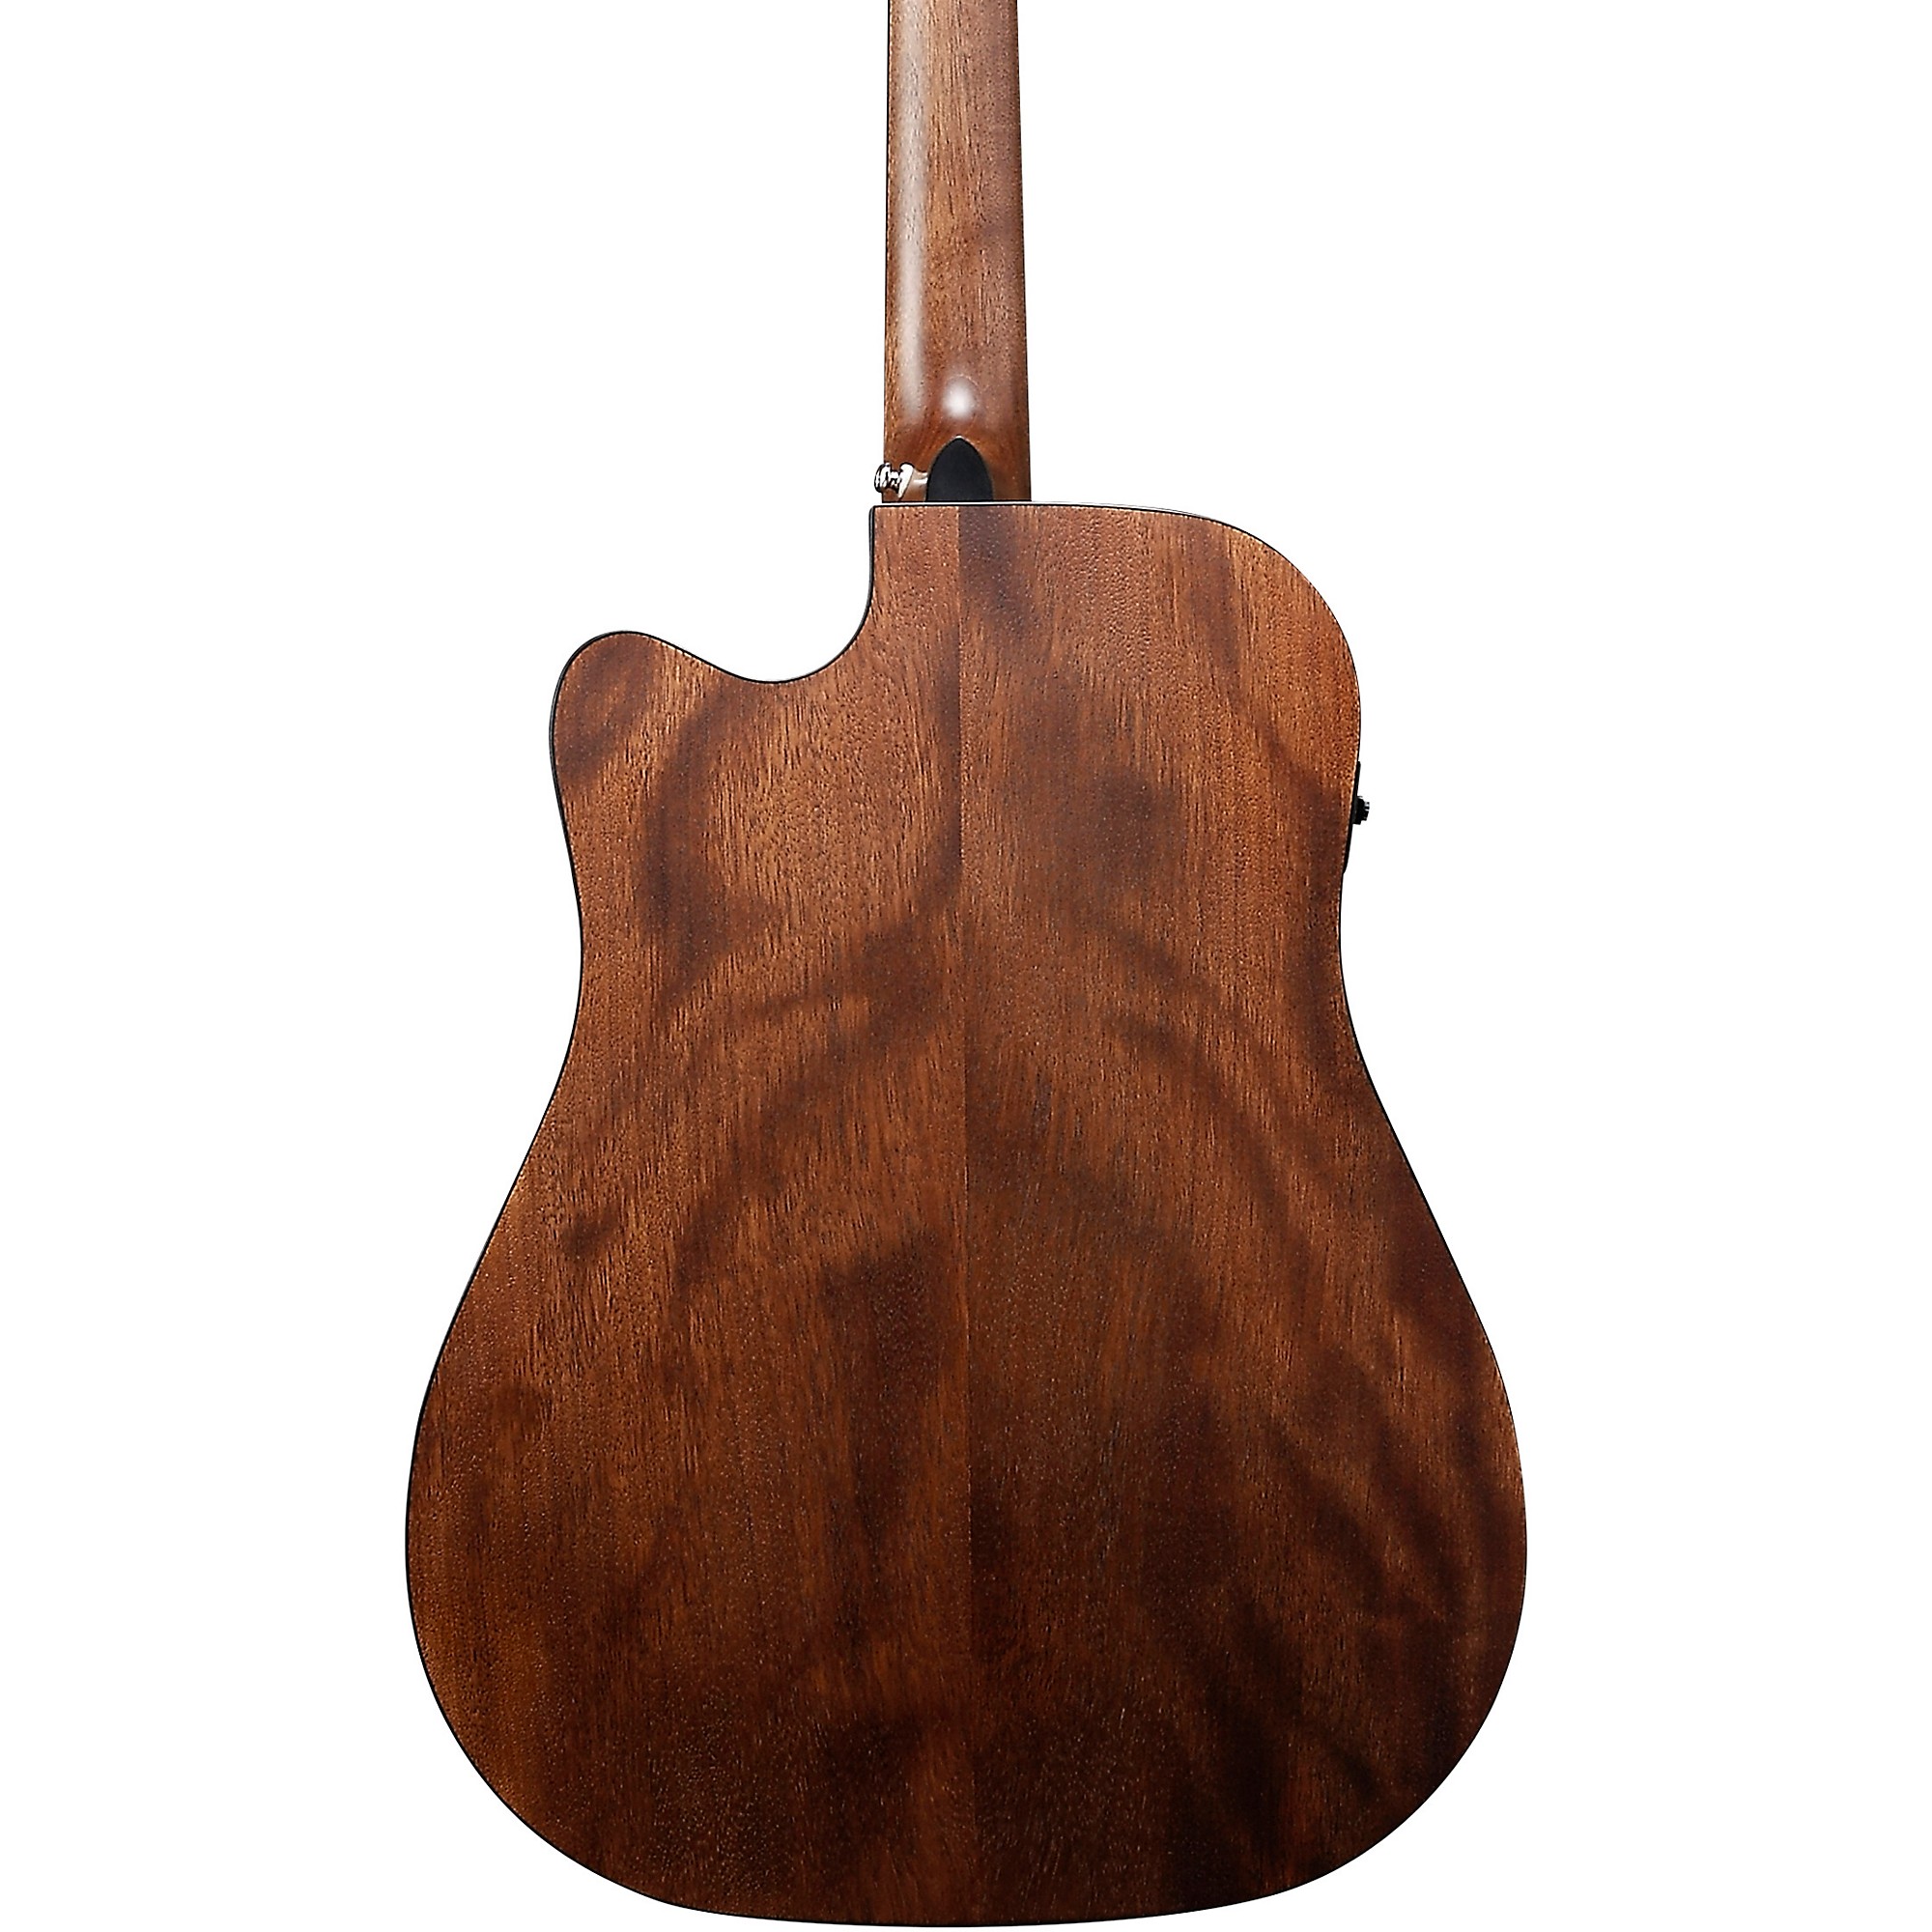 Ibanez AW5412CE-OPN 12-струнная акусто-электрическая гитара Satin Natural цена и фото